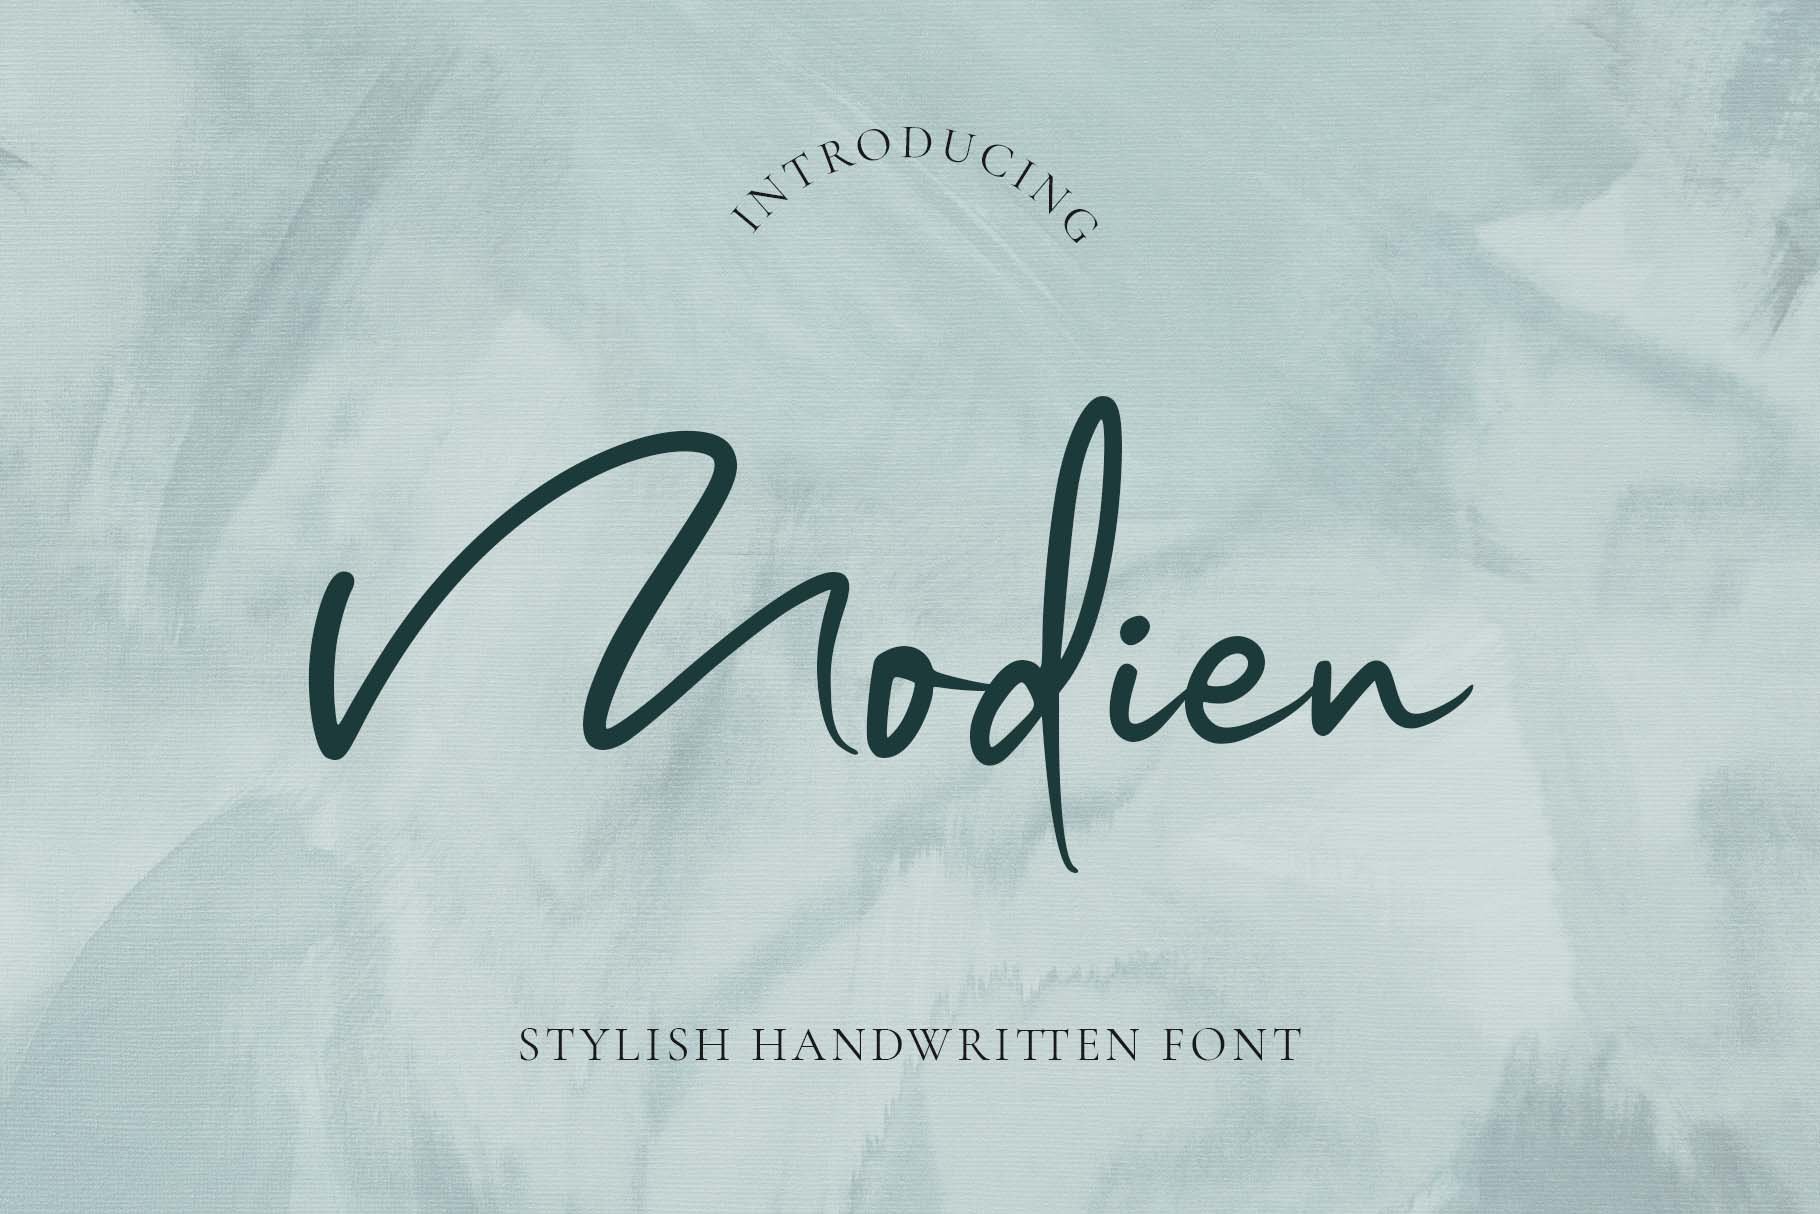 Modien - Stylish Handwritten Font cover image.